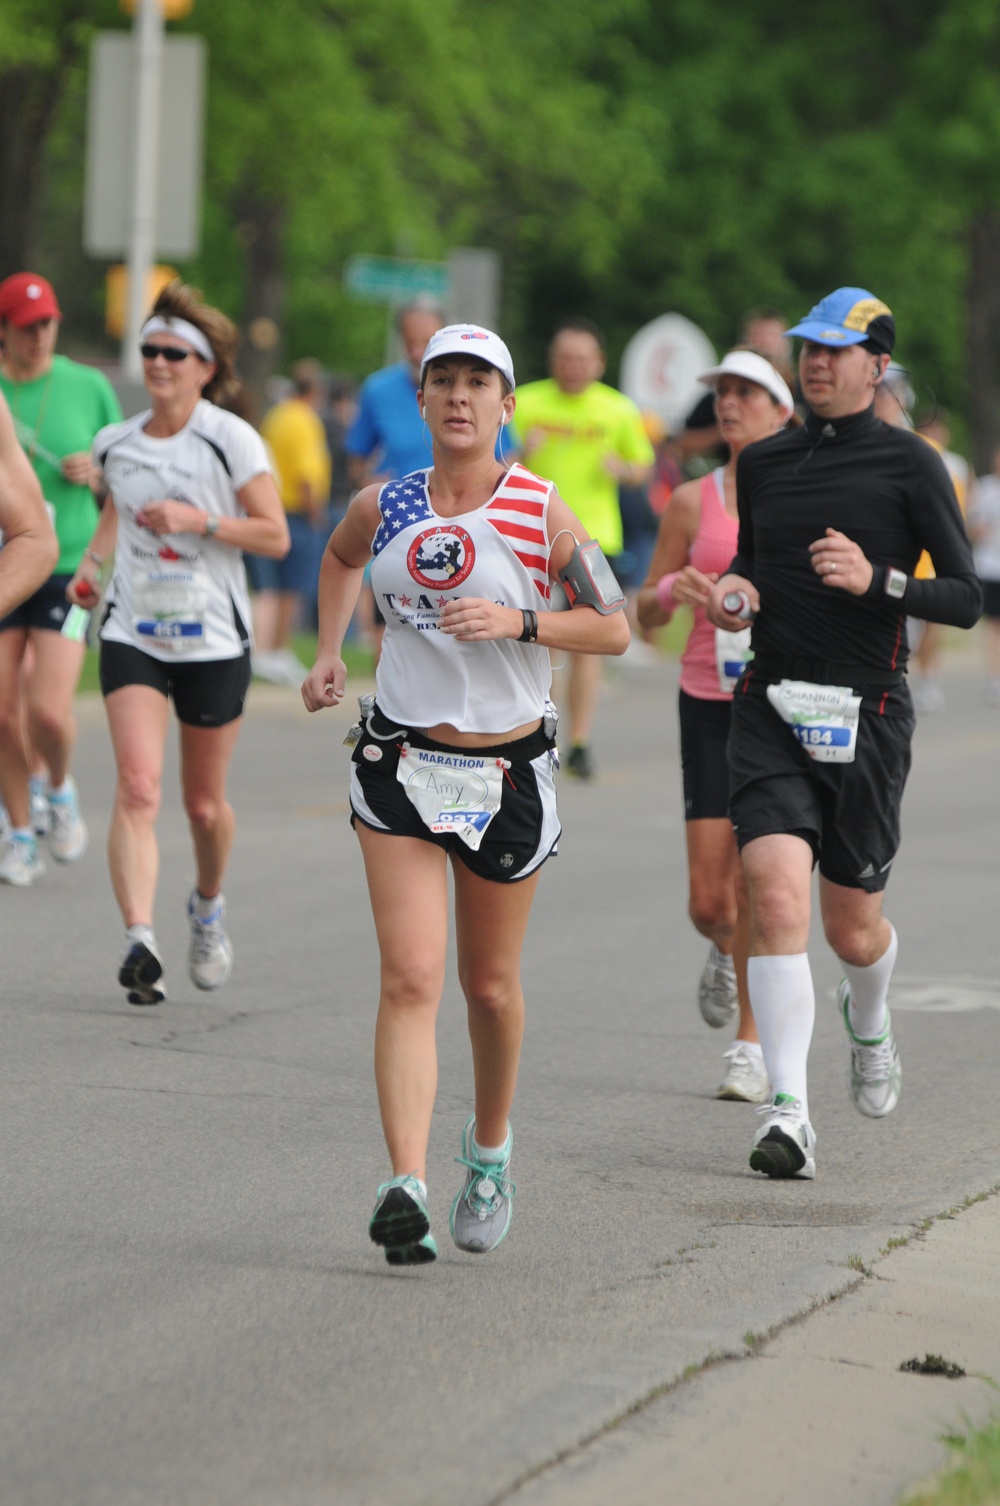 DVIDS Images TAPS runs for survivors at Fargo Marathon [Image 8 of 16]